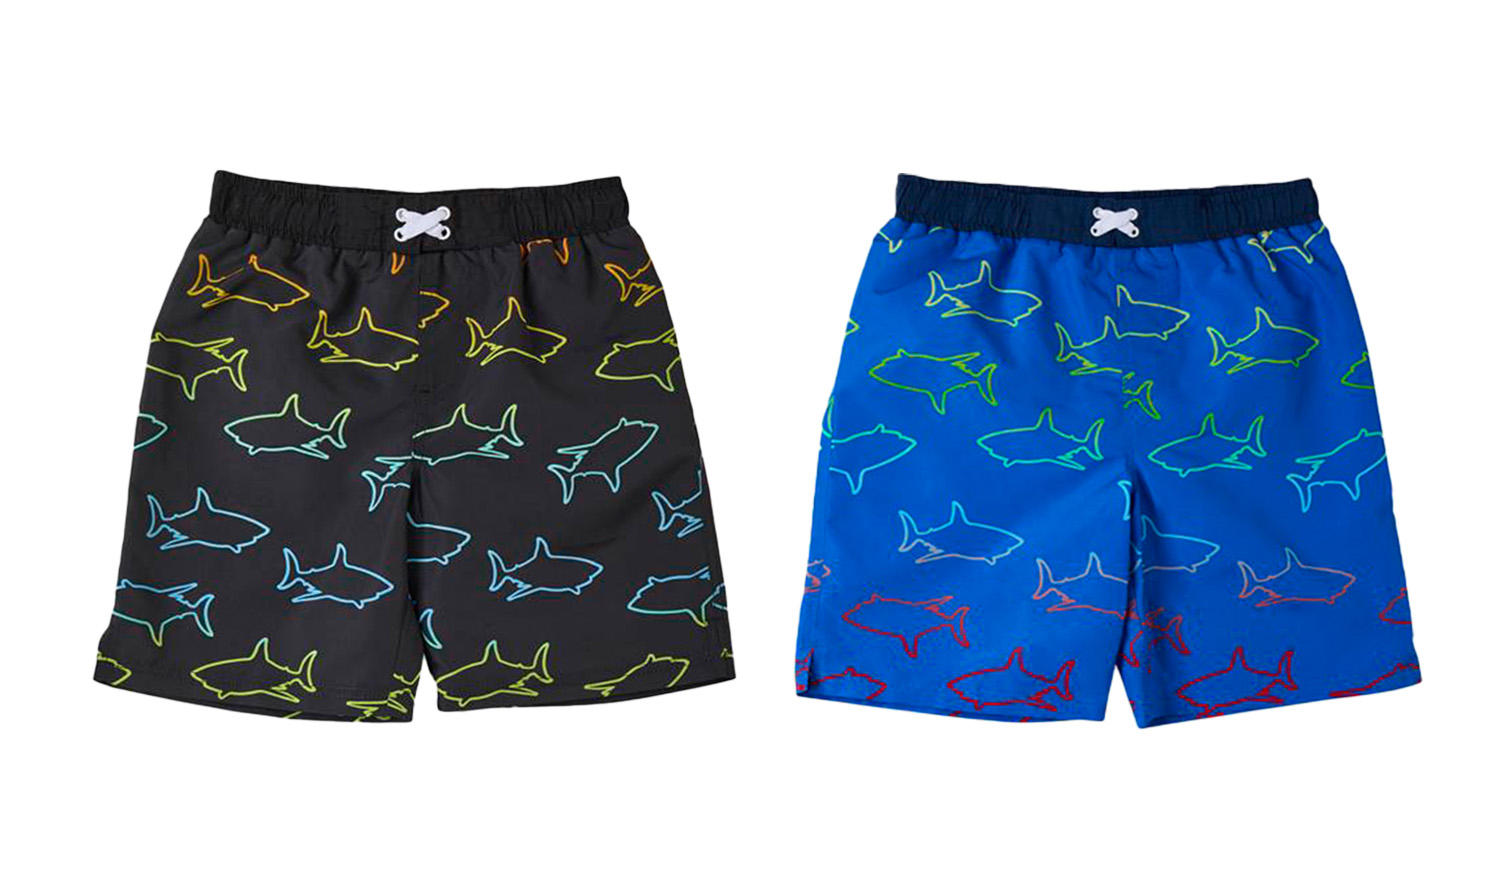 Toddler Boy's Fashion Swim Trunks - Two Tone Ombre Shark Print - Sizes 2T-4T